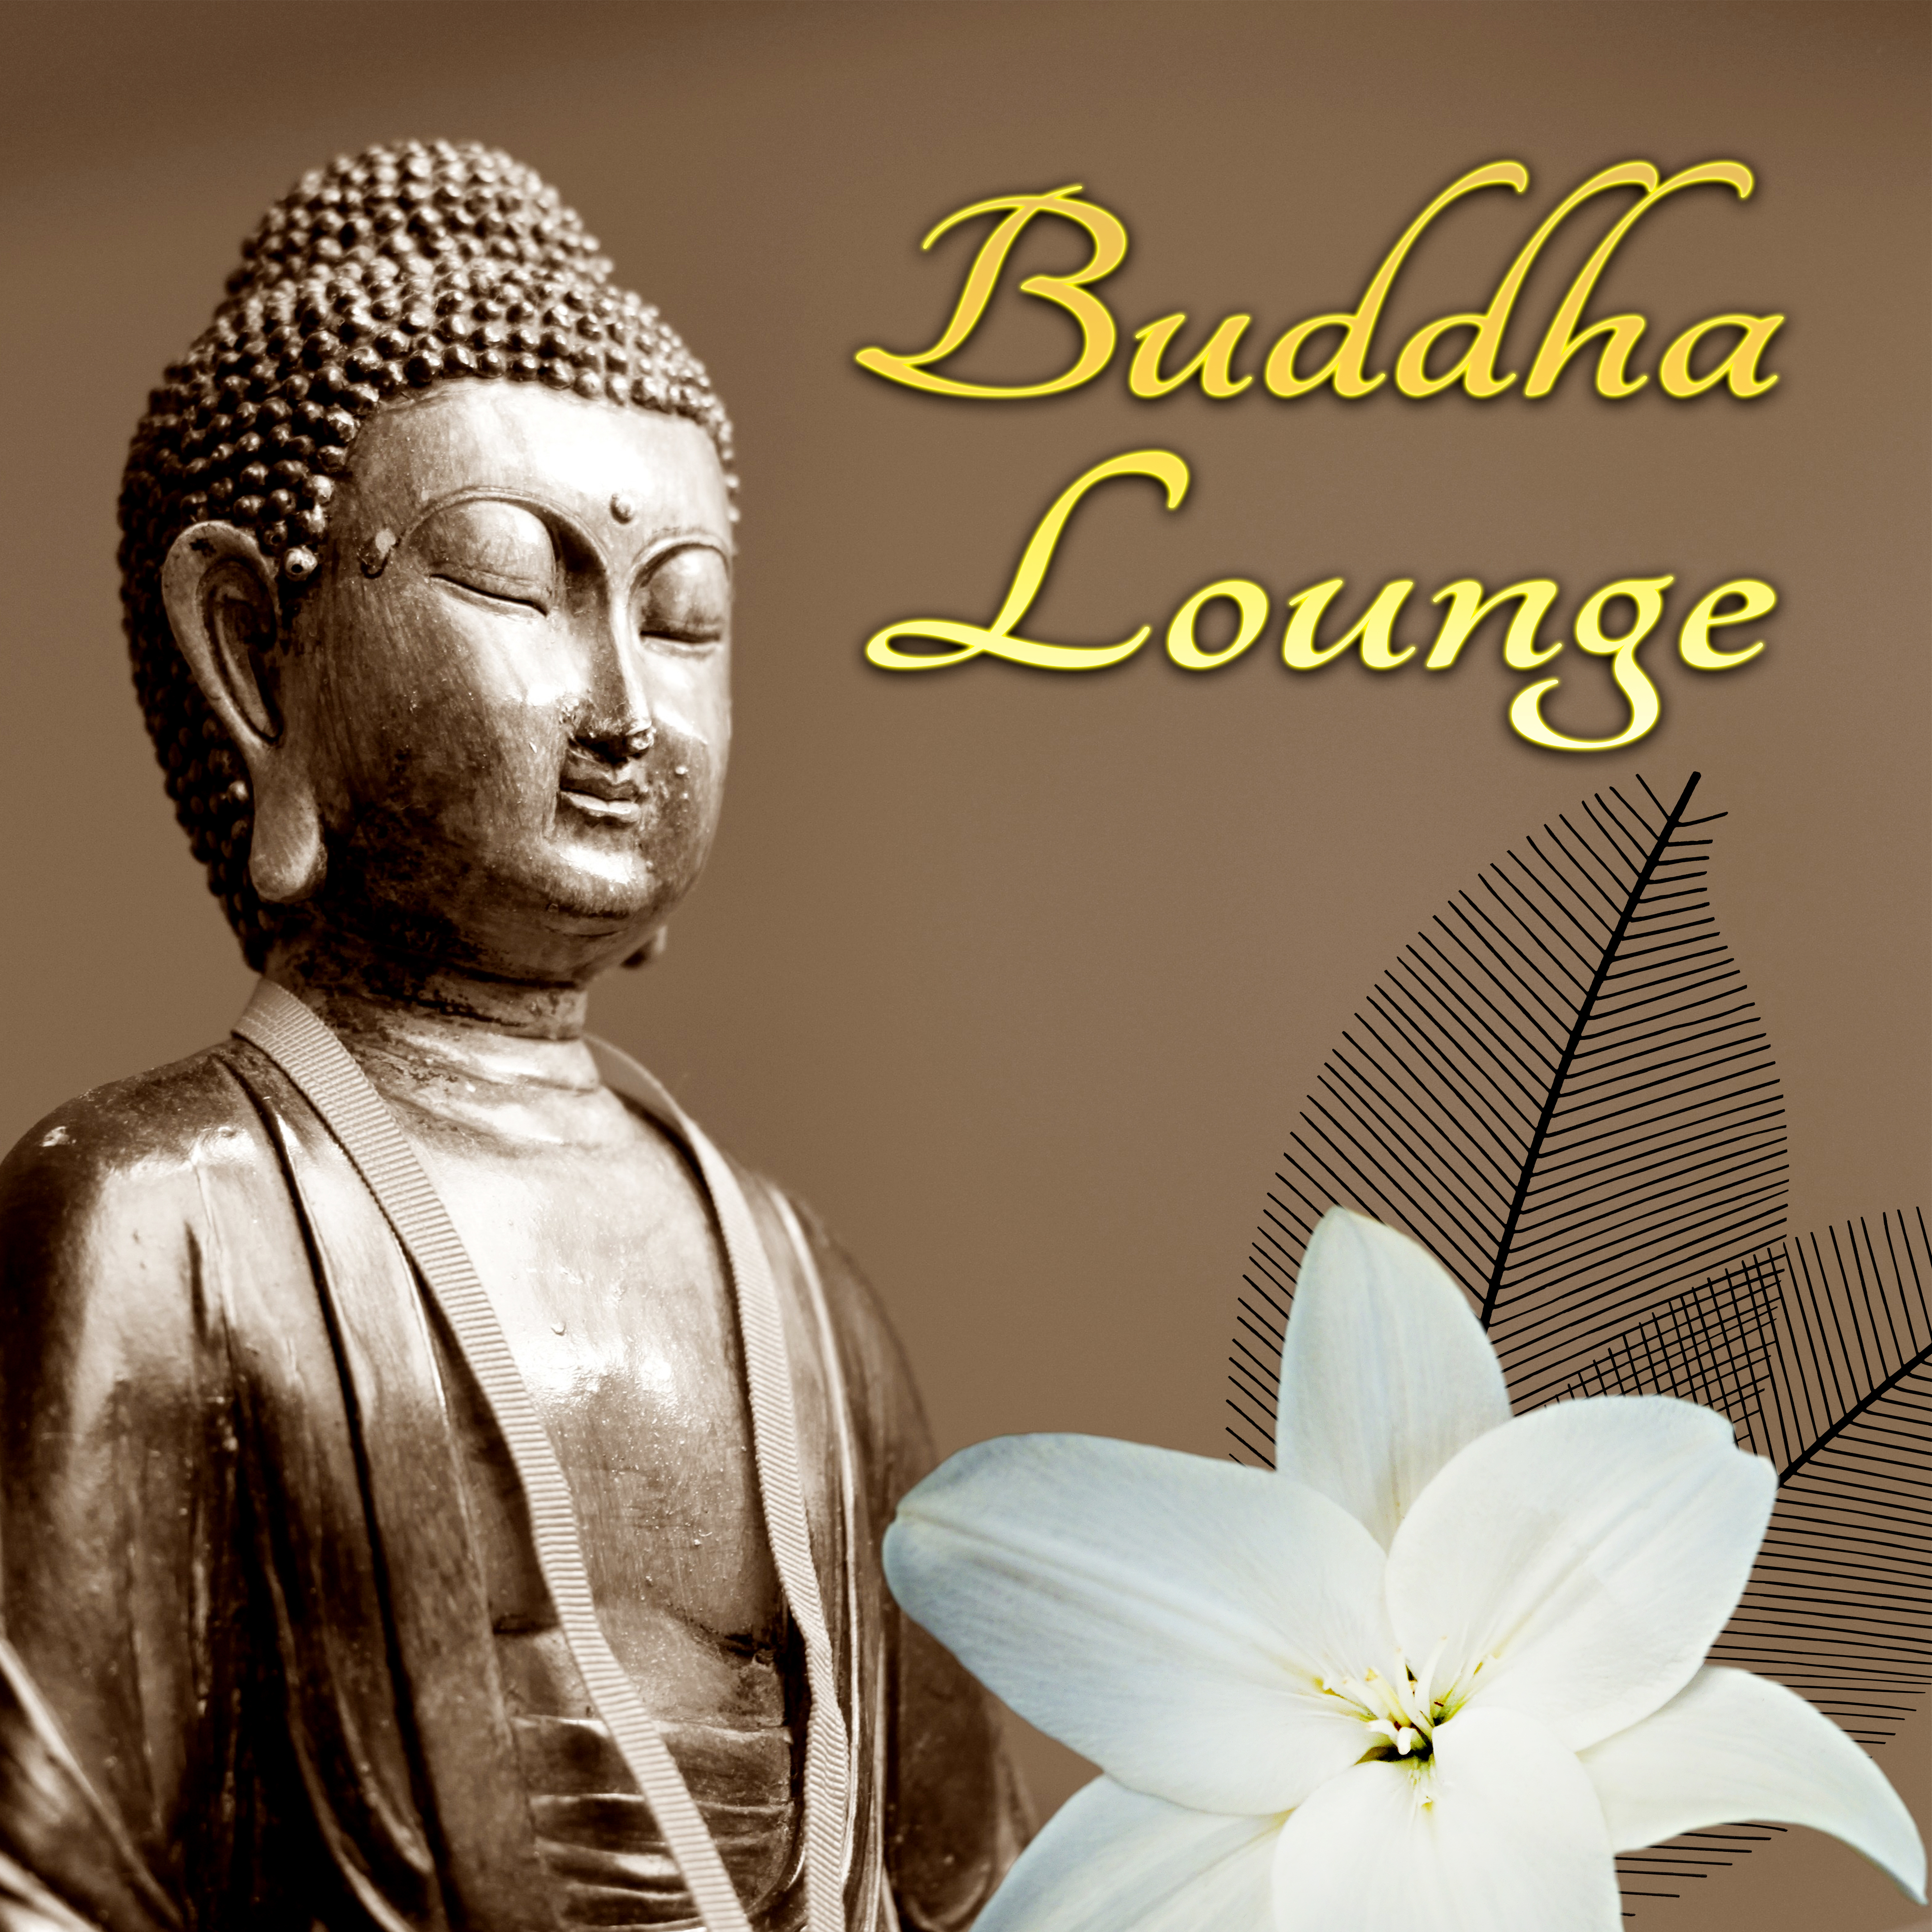 Buddha Lounge  Chillout Music, Buddha Spirit, Groove, Chill Sessions, Buddha Spritz, Musica Chill Out, Just Relax,  Songs